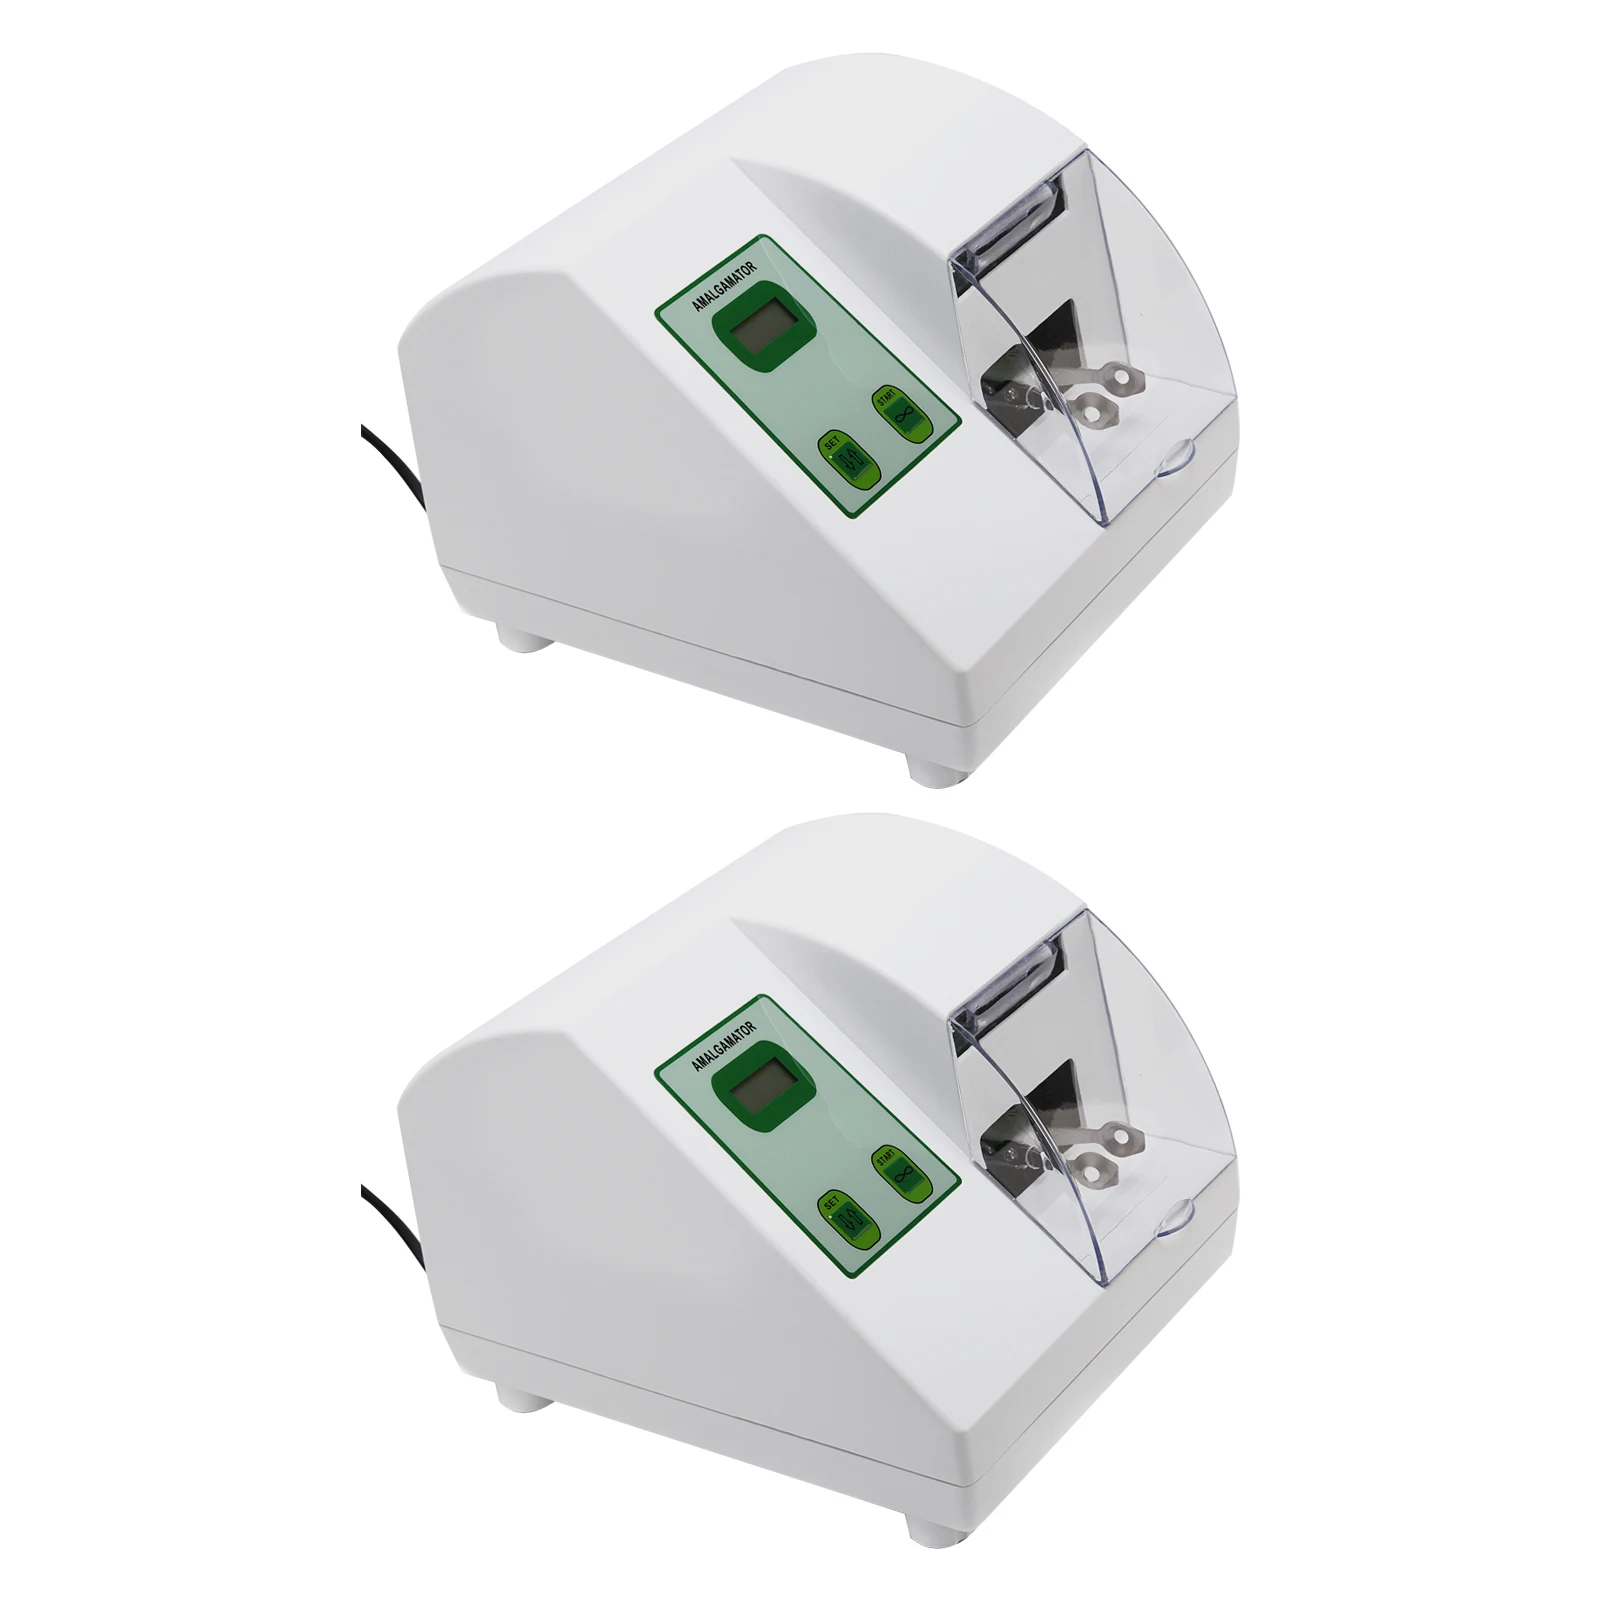 Dental Amalgamator Amalgam Capsule Mixer Digital High Speed Lab for dentist